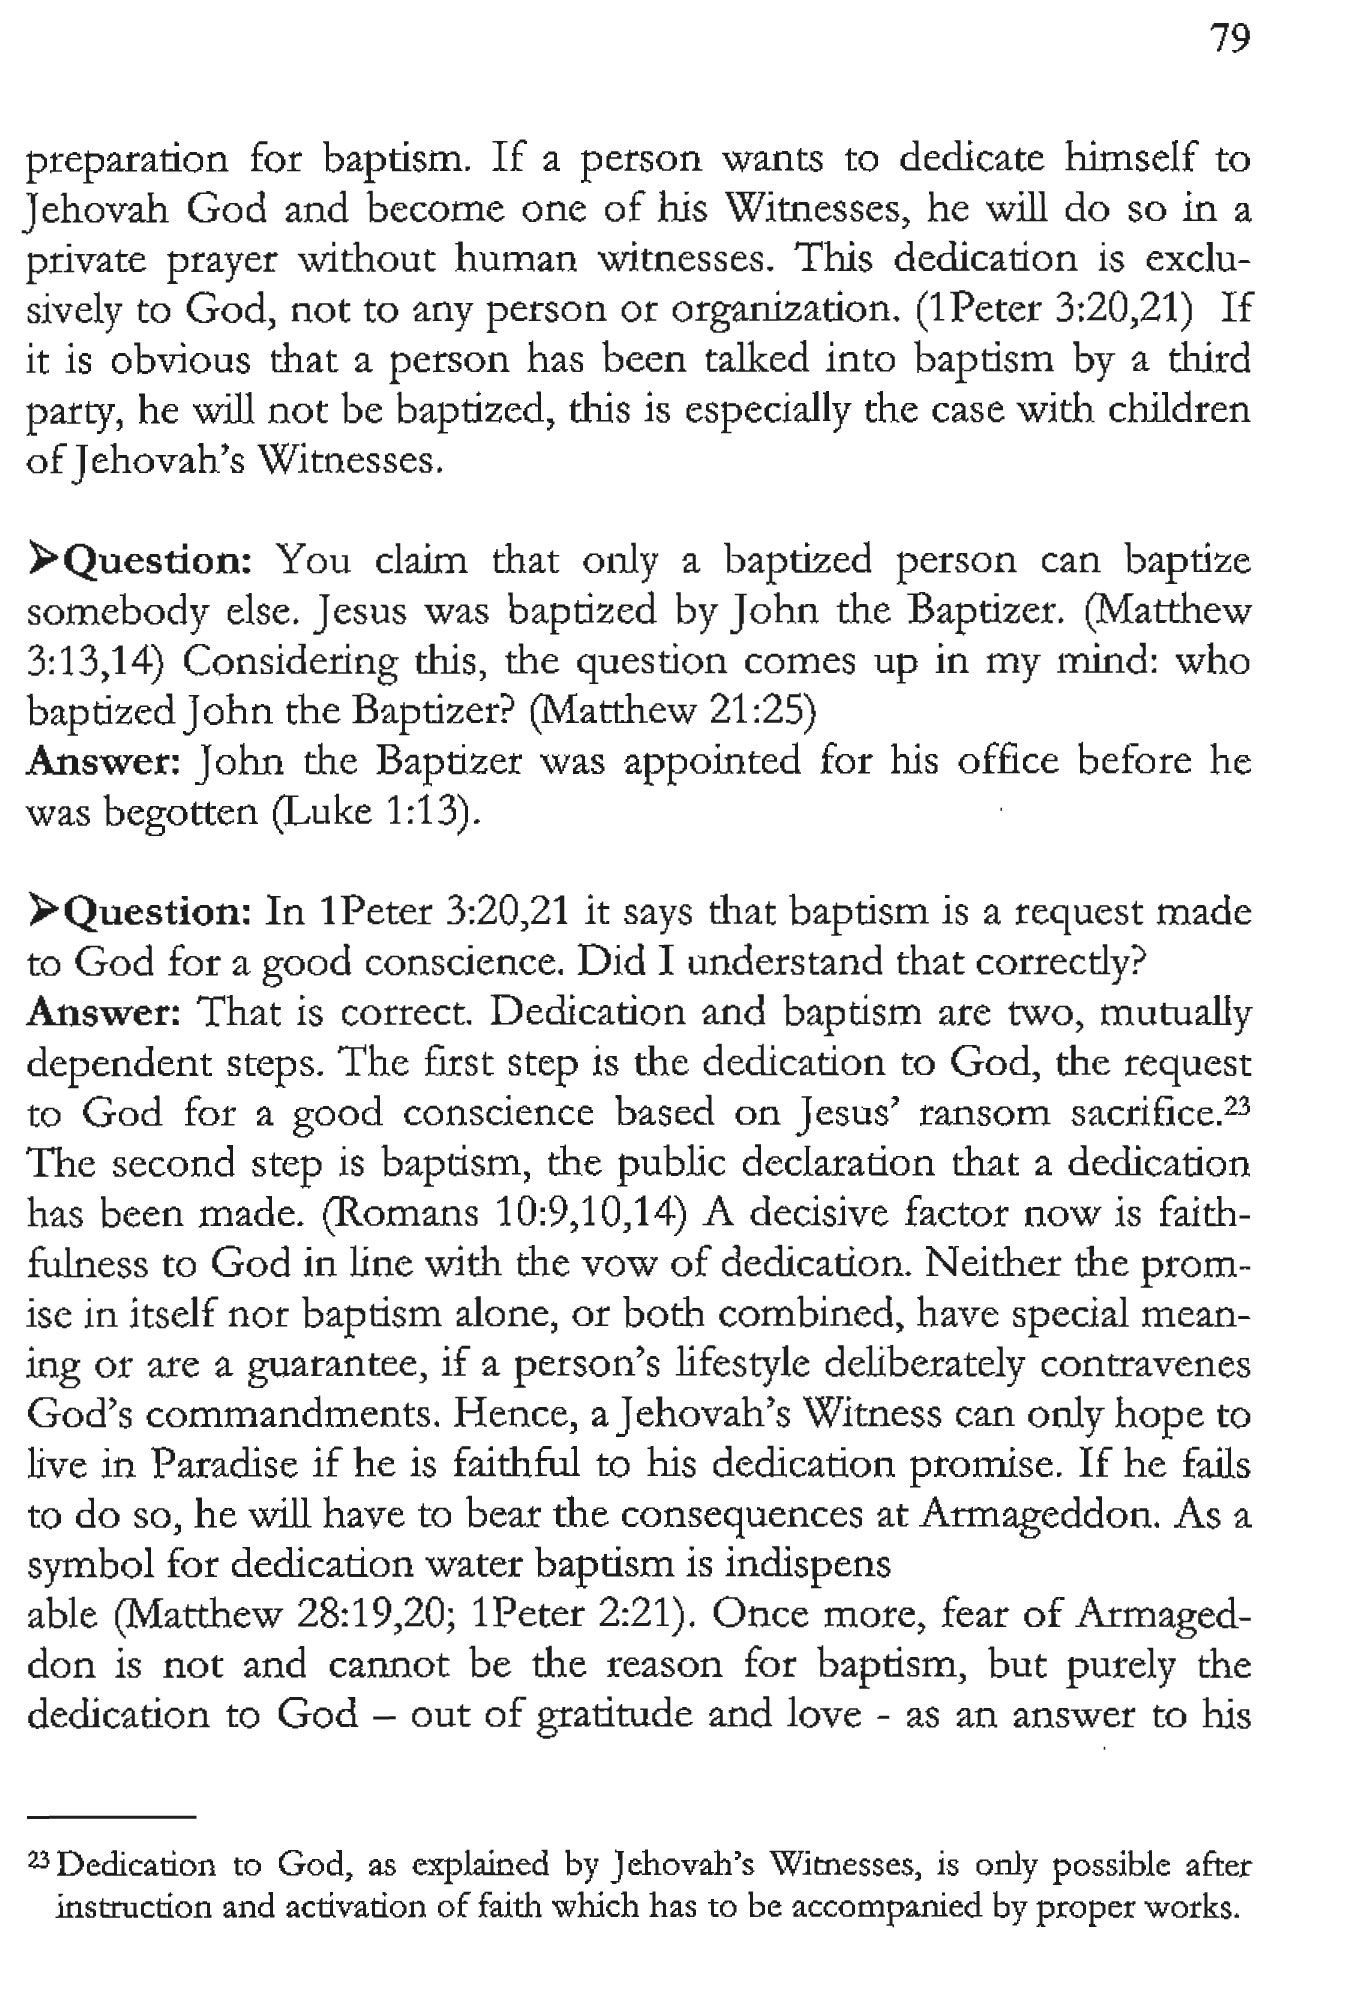 jw-baptism-pg-79